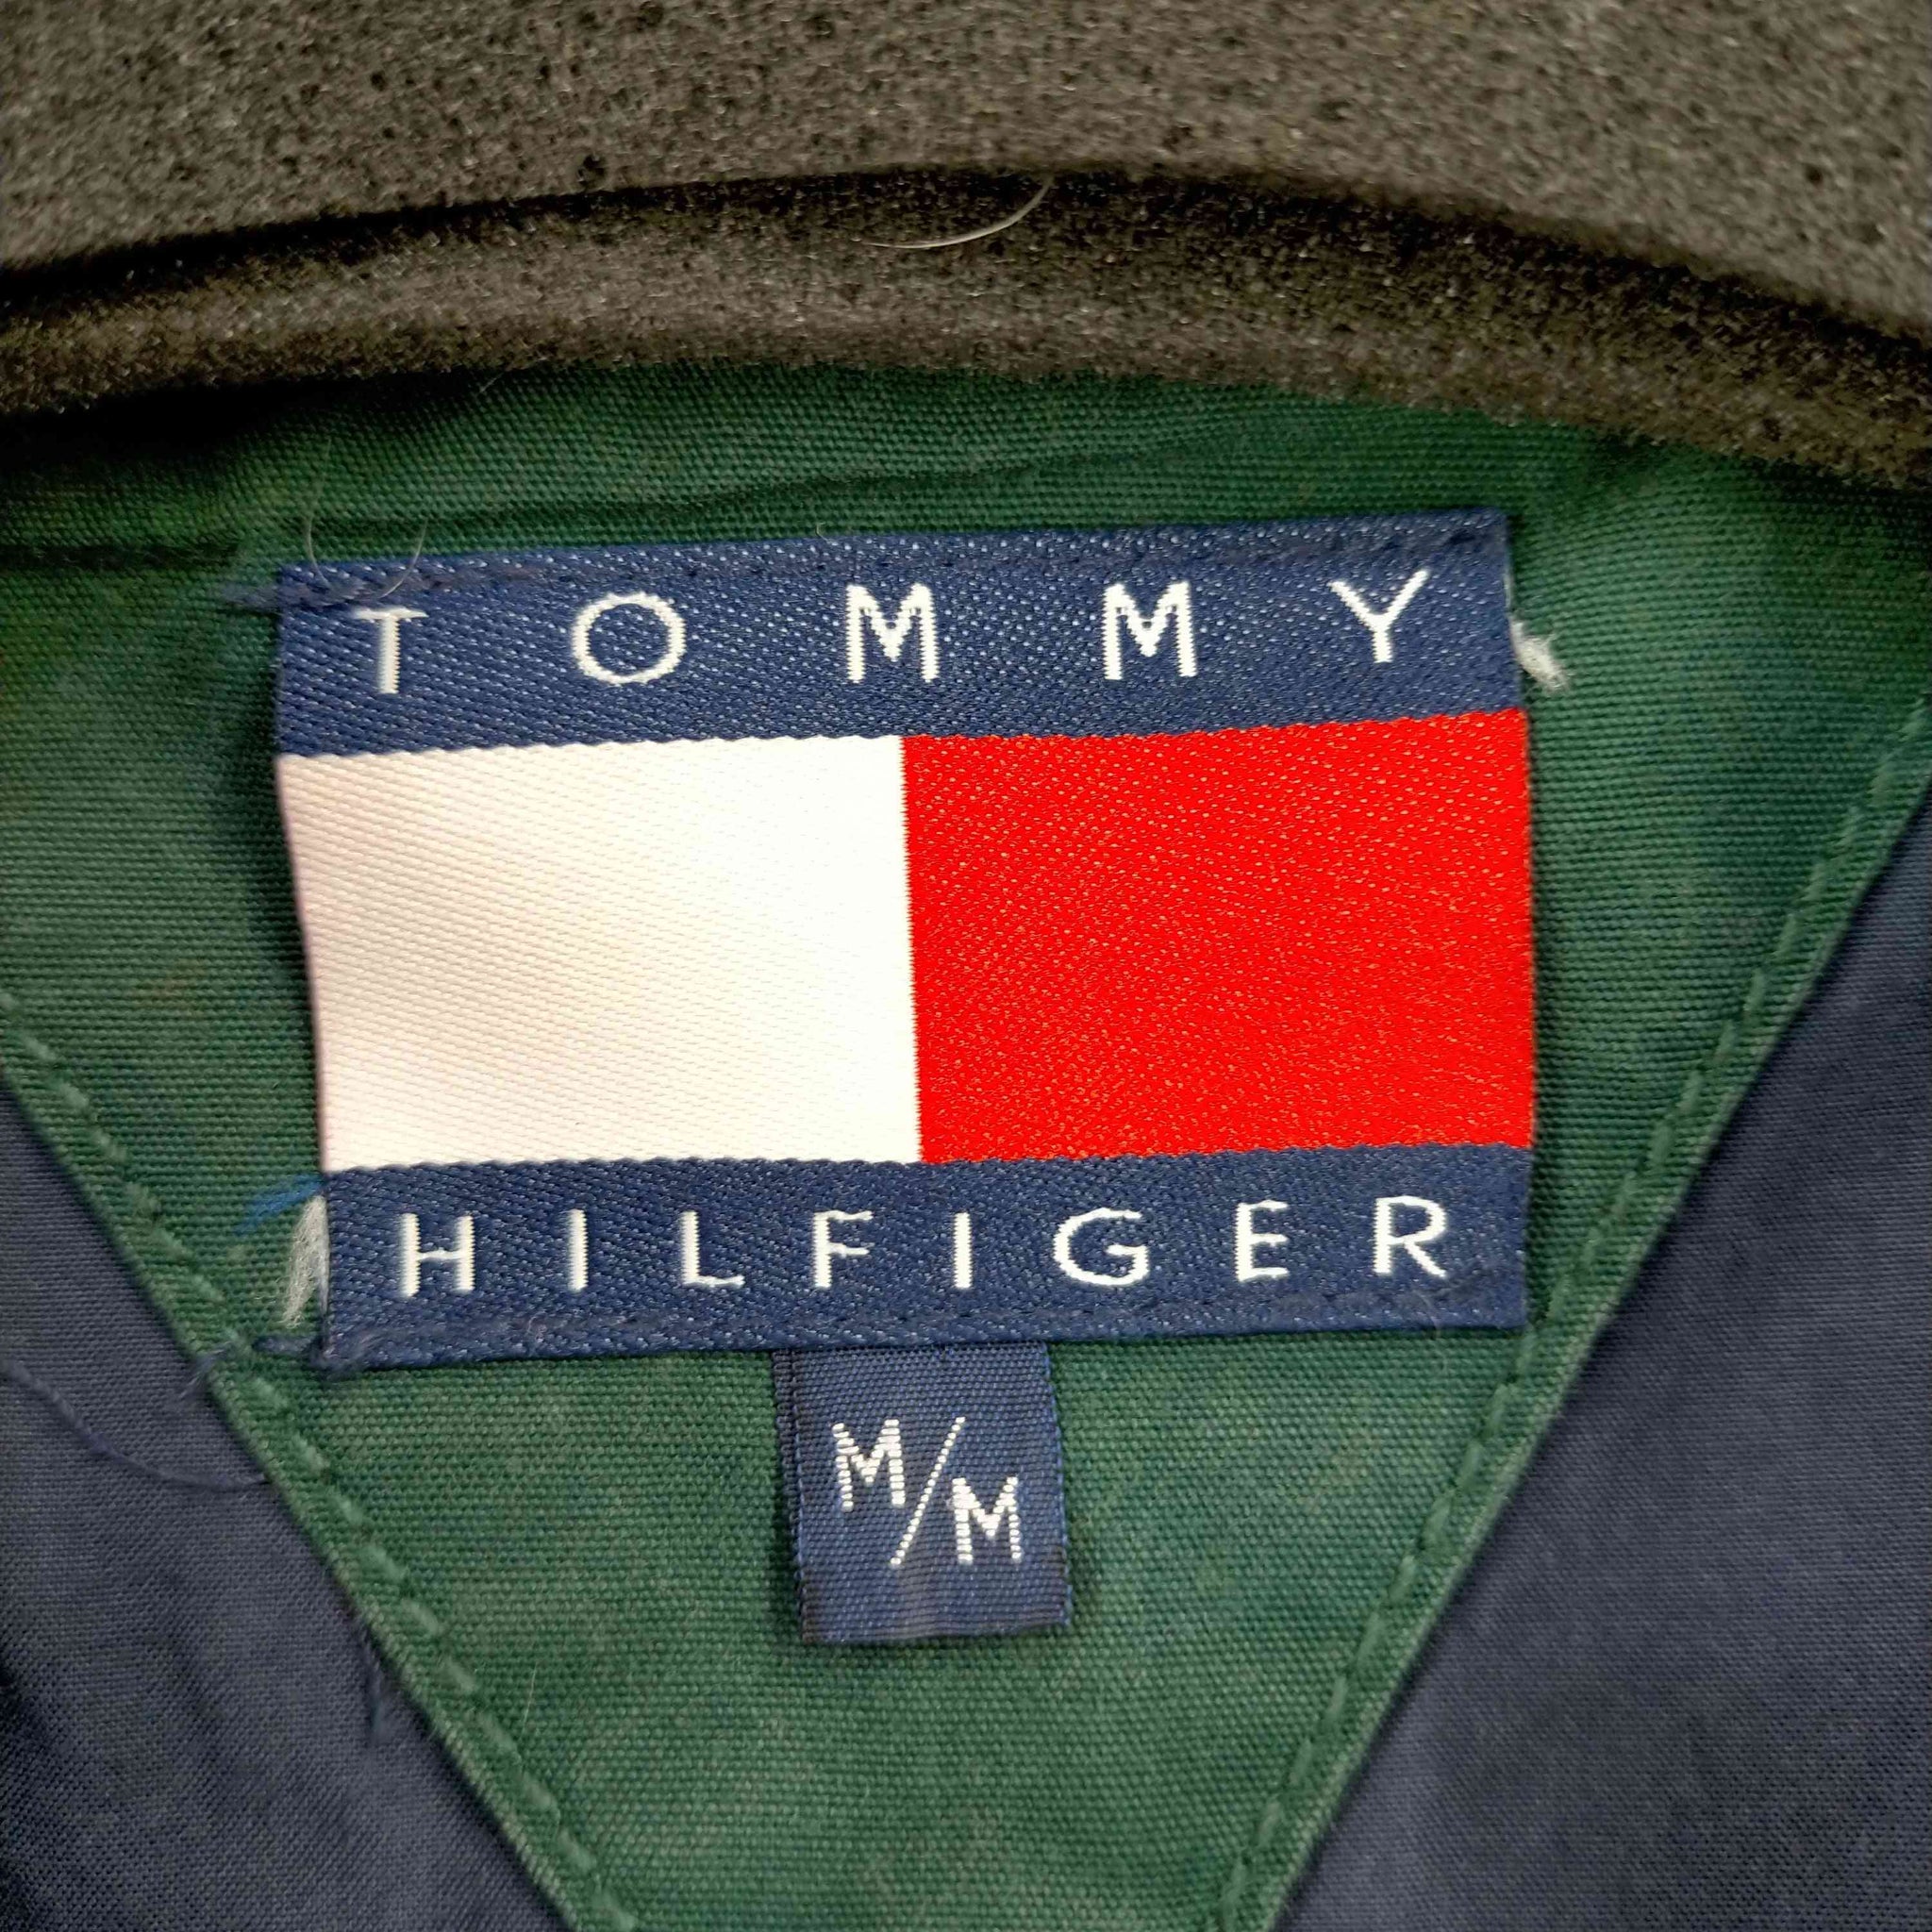 TOMMY HILFIGER(トミーヒルフィガー)コットンモッズコート